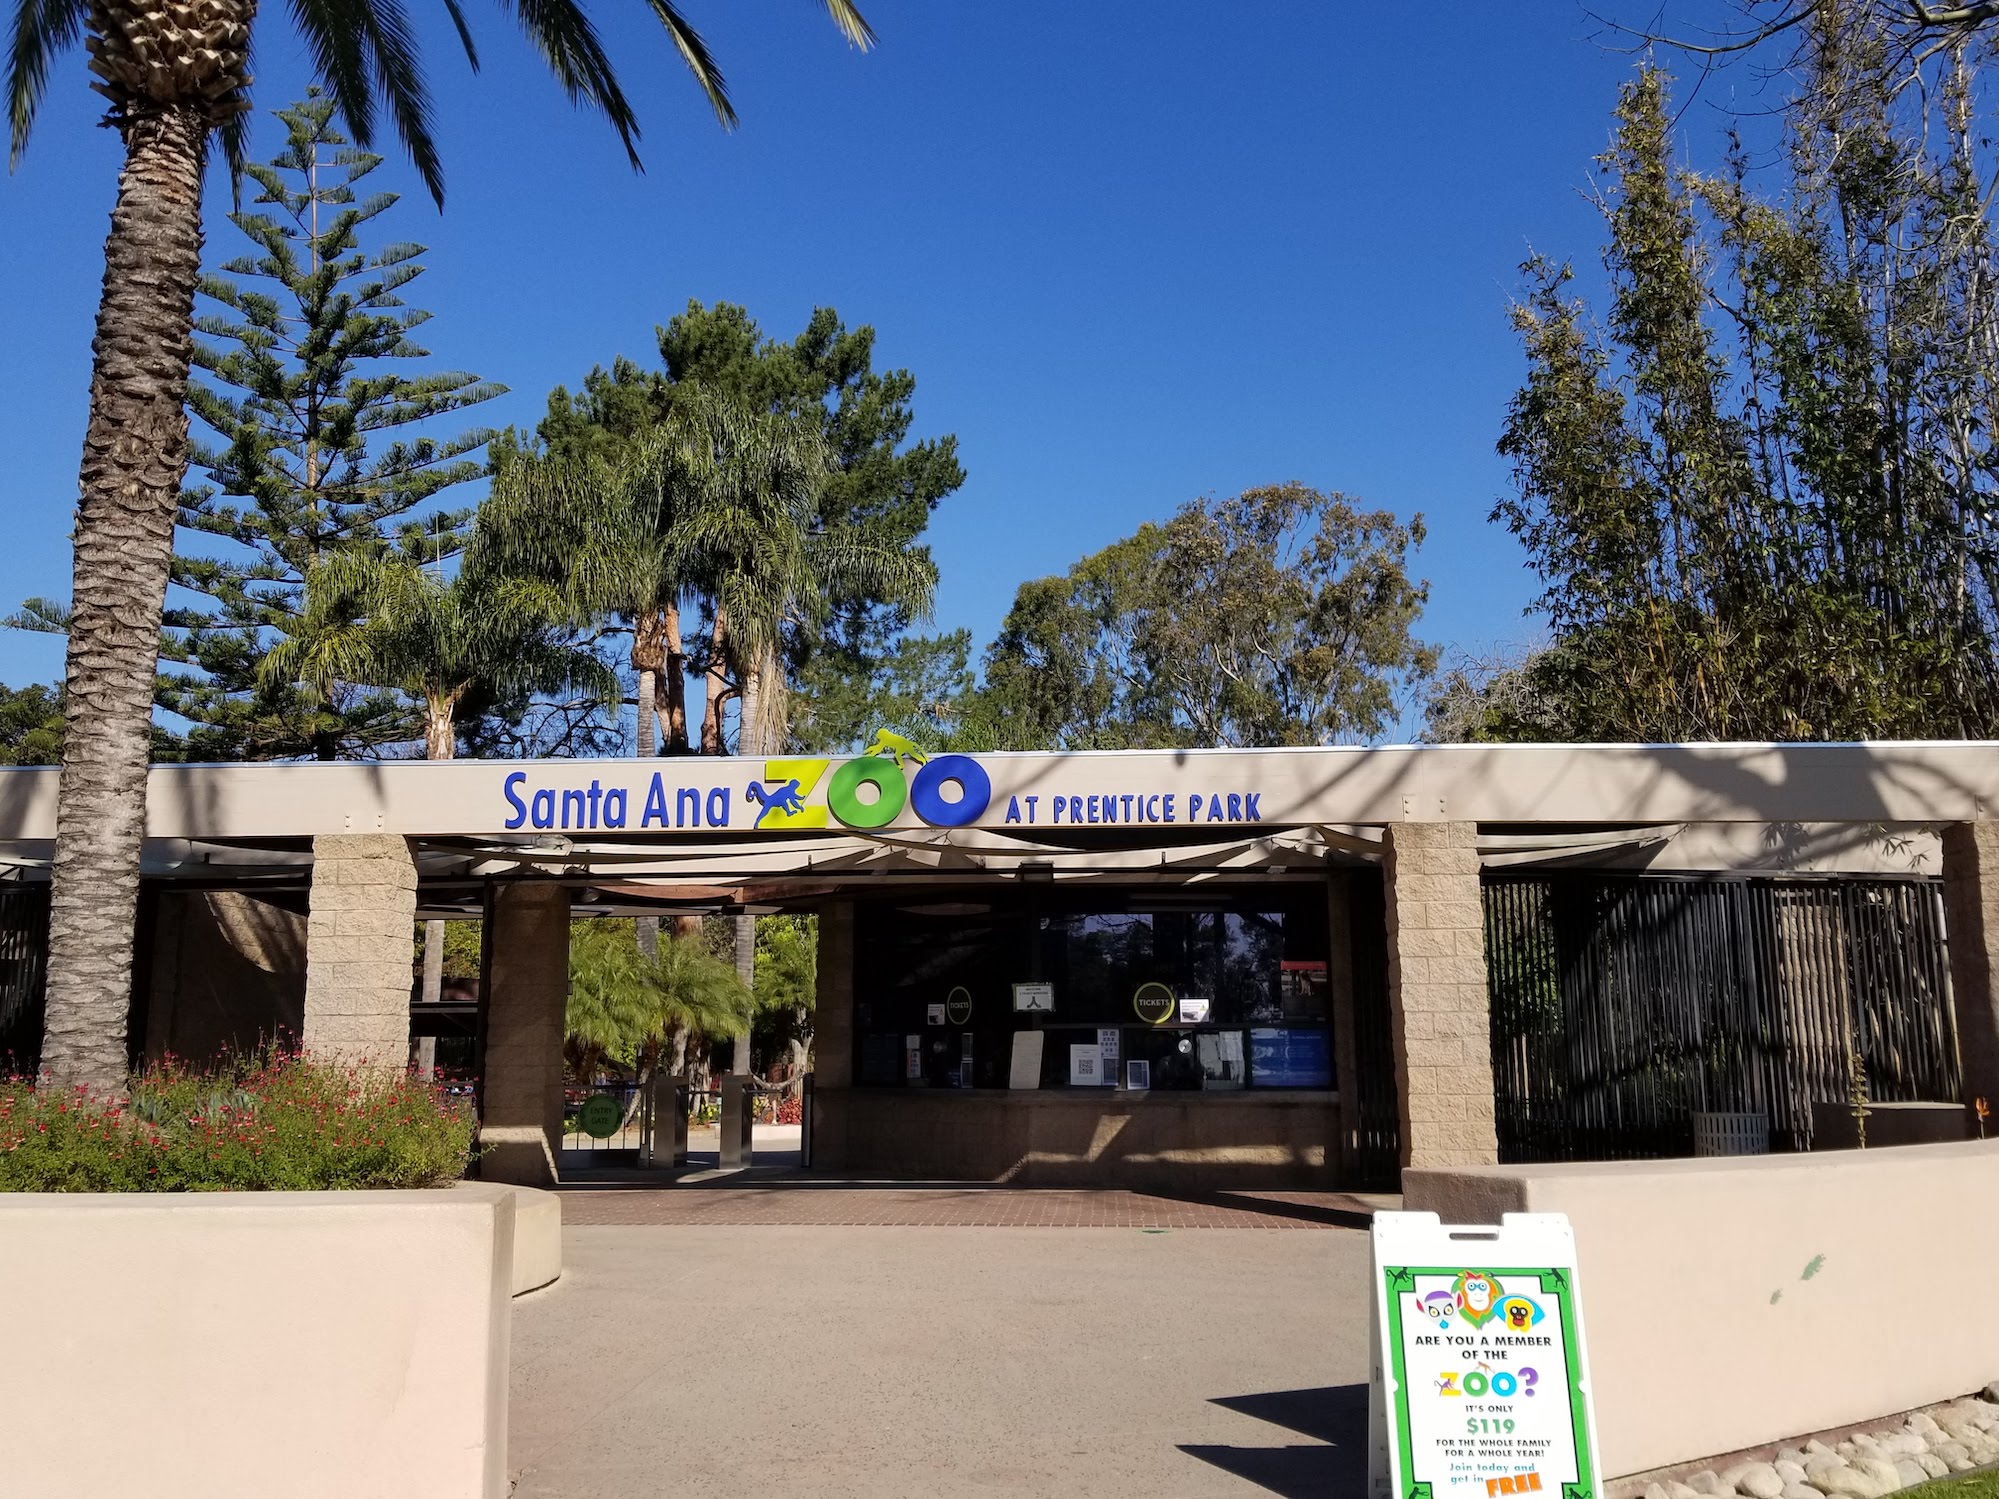 Entrance to the Santa Ana Zoo at Prentice Park